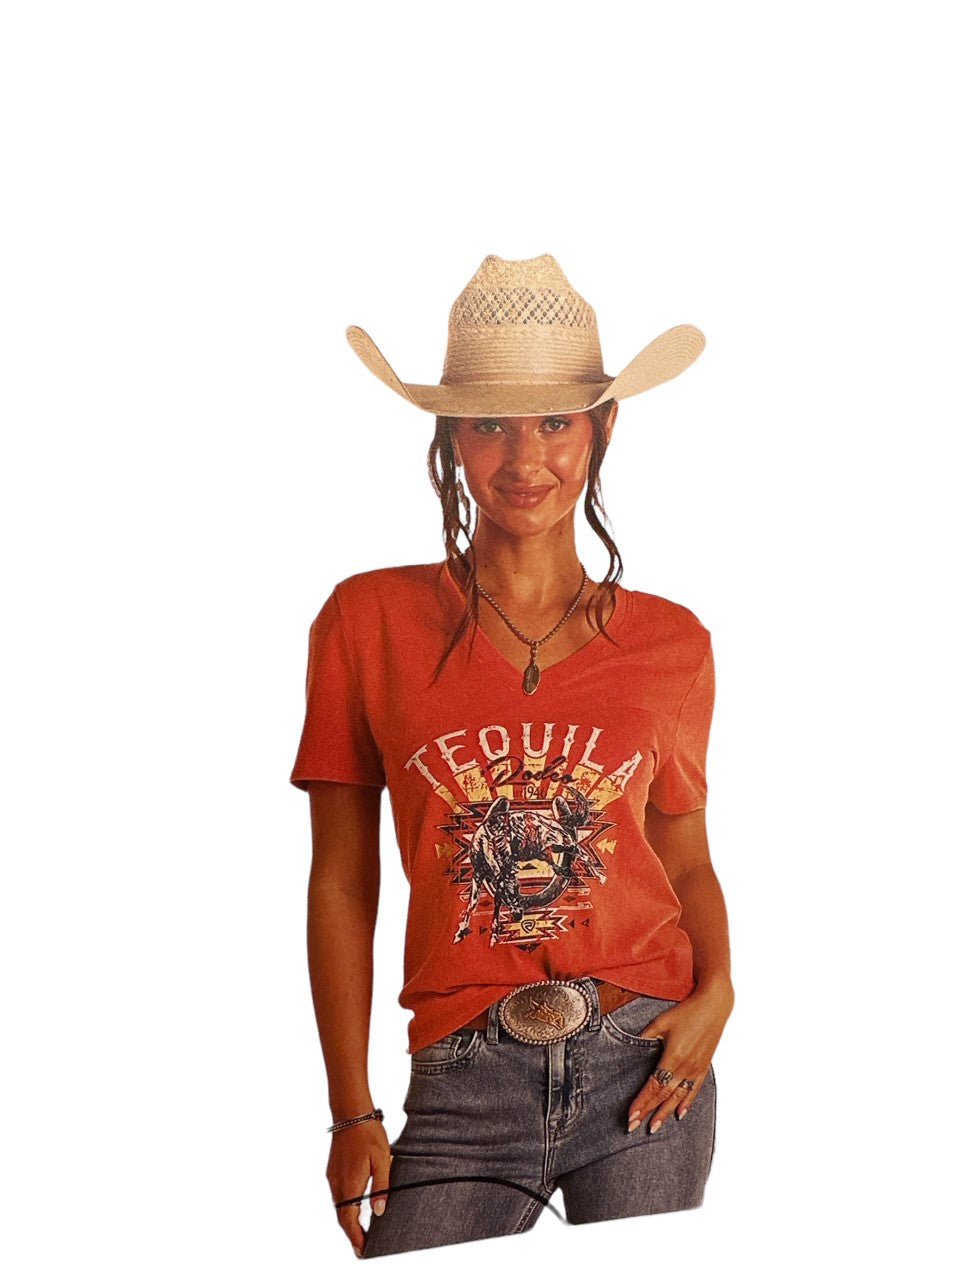 Women's Rock & Roll Denim Tequila Rodeo T-Shirt